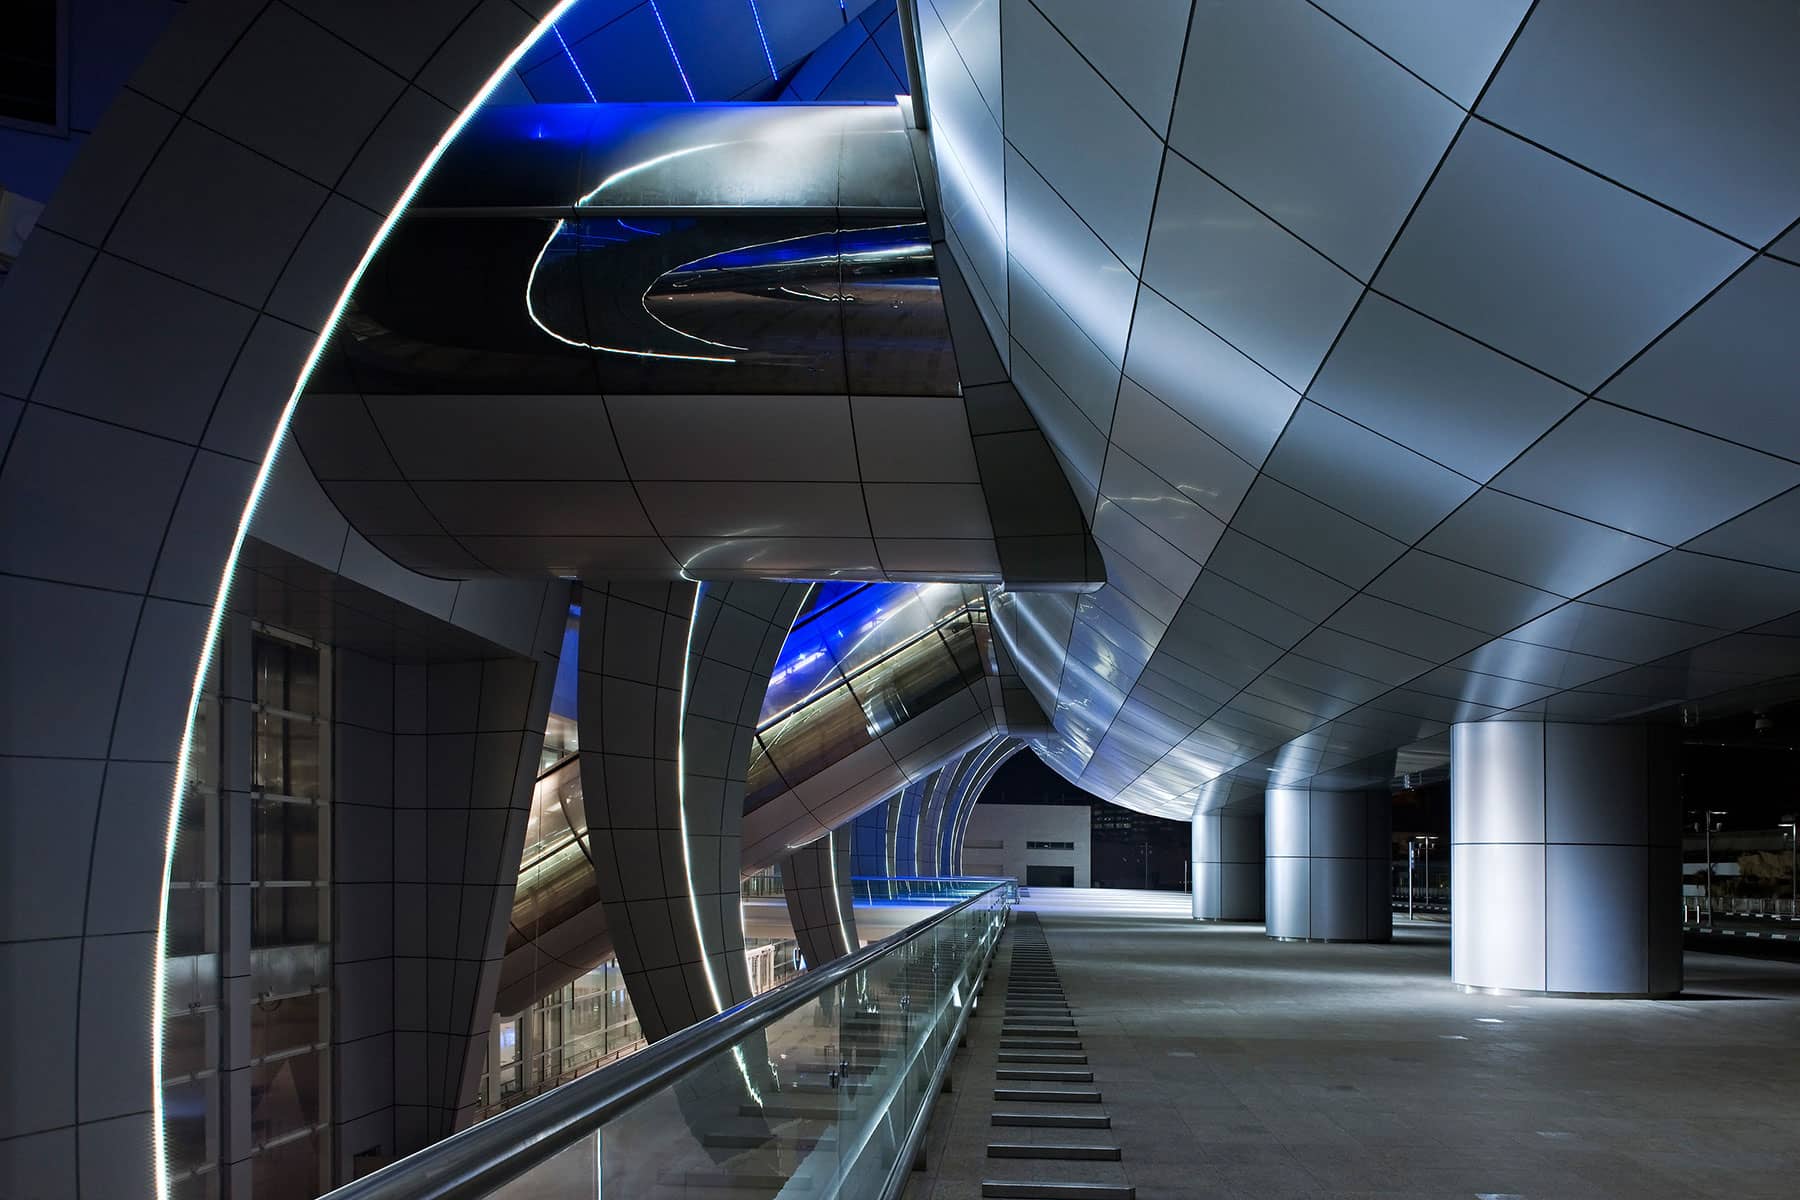 Architecture Photography Dubai: An abstract perspective of Dubai international airport terminal 3.